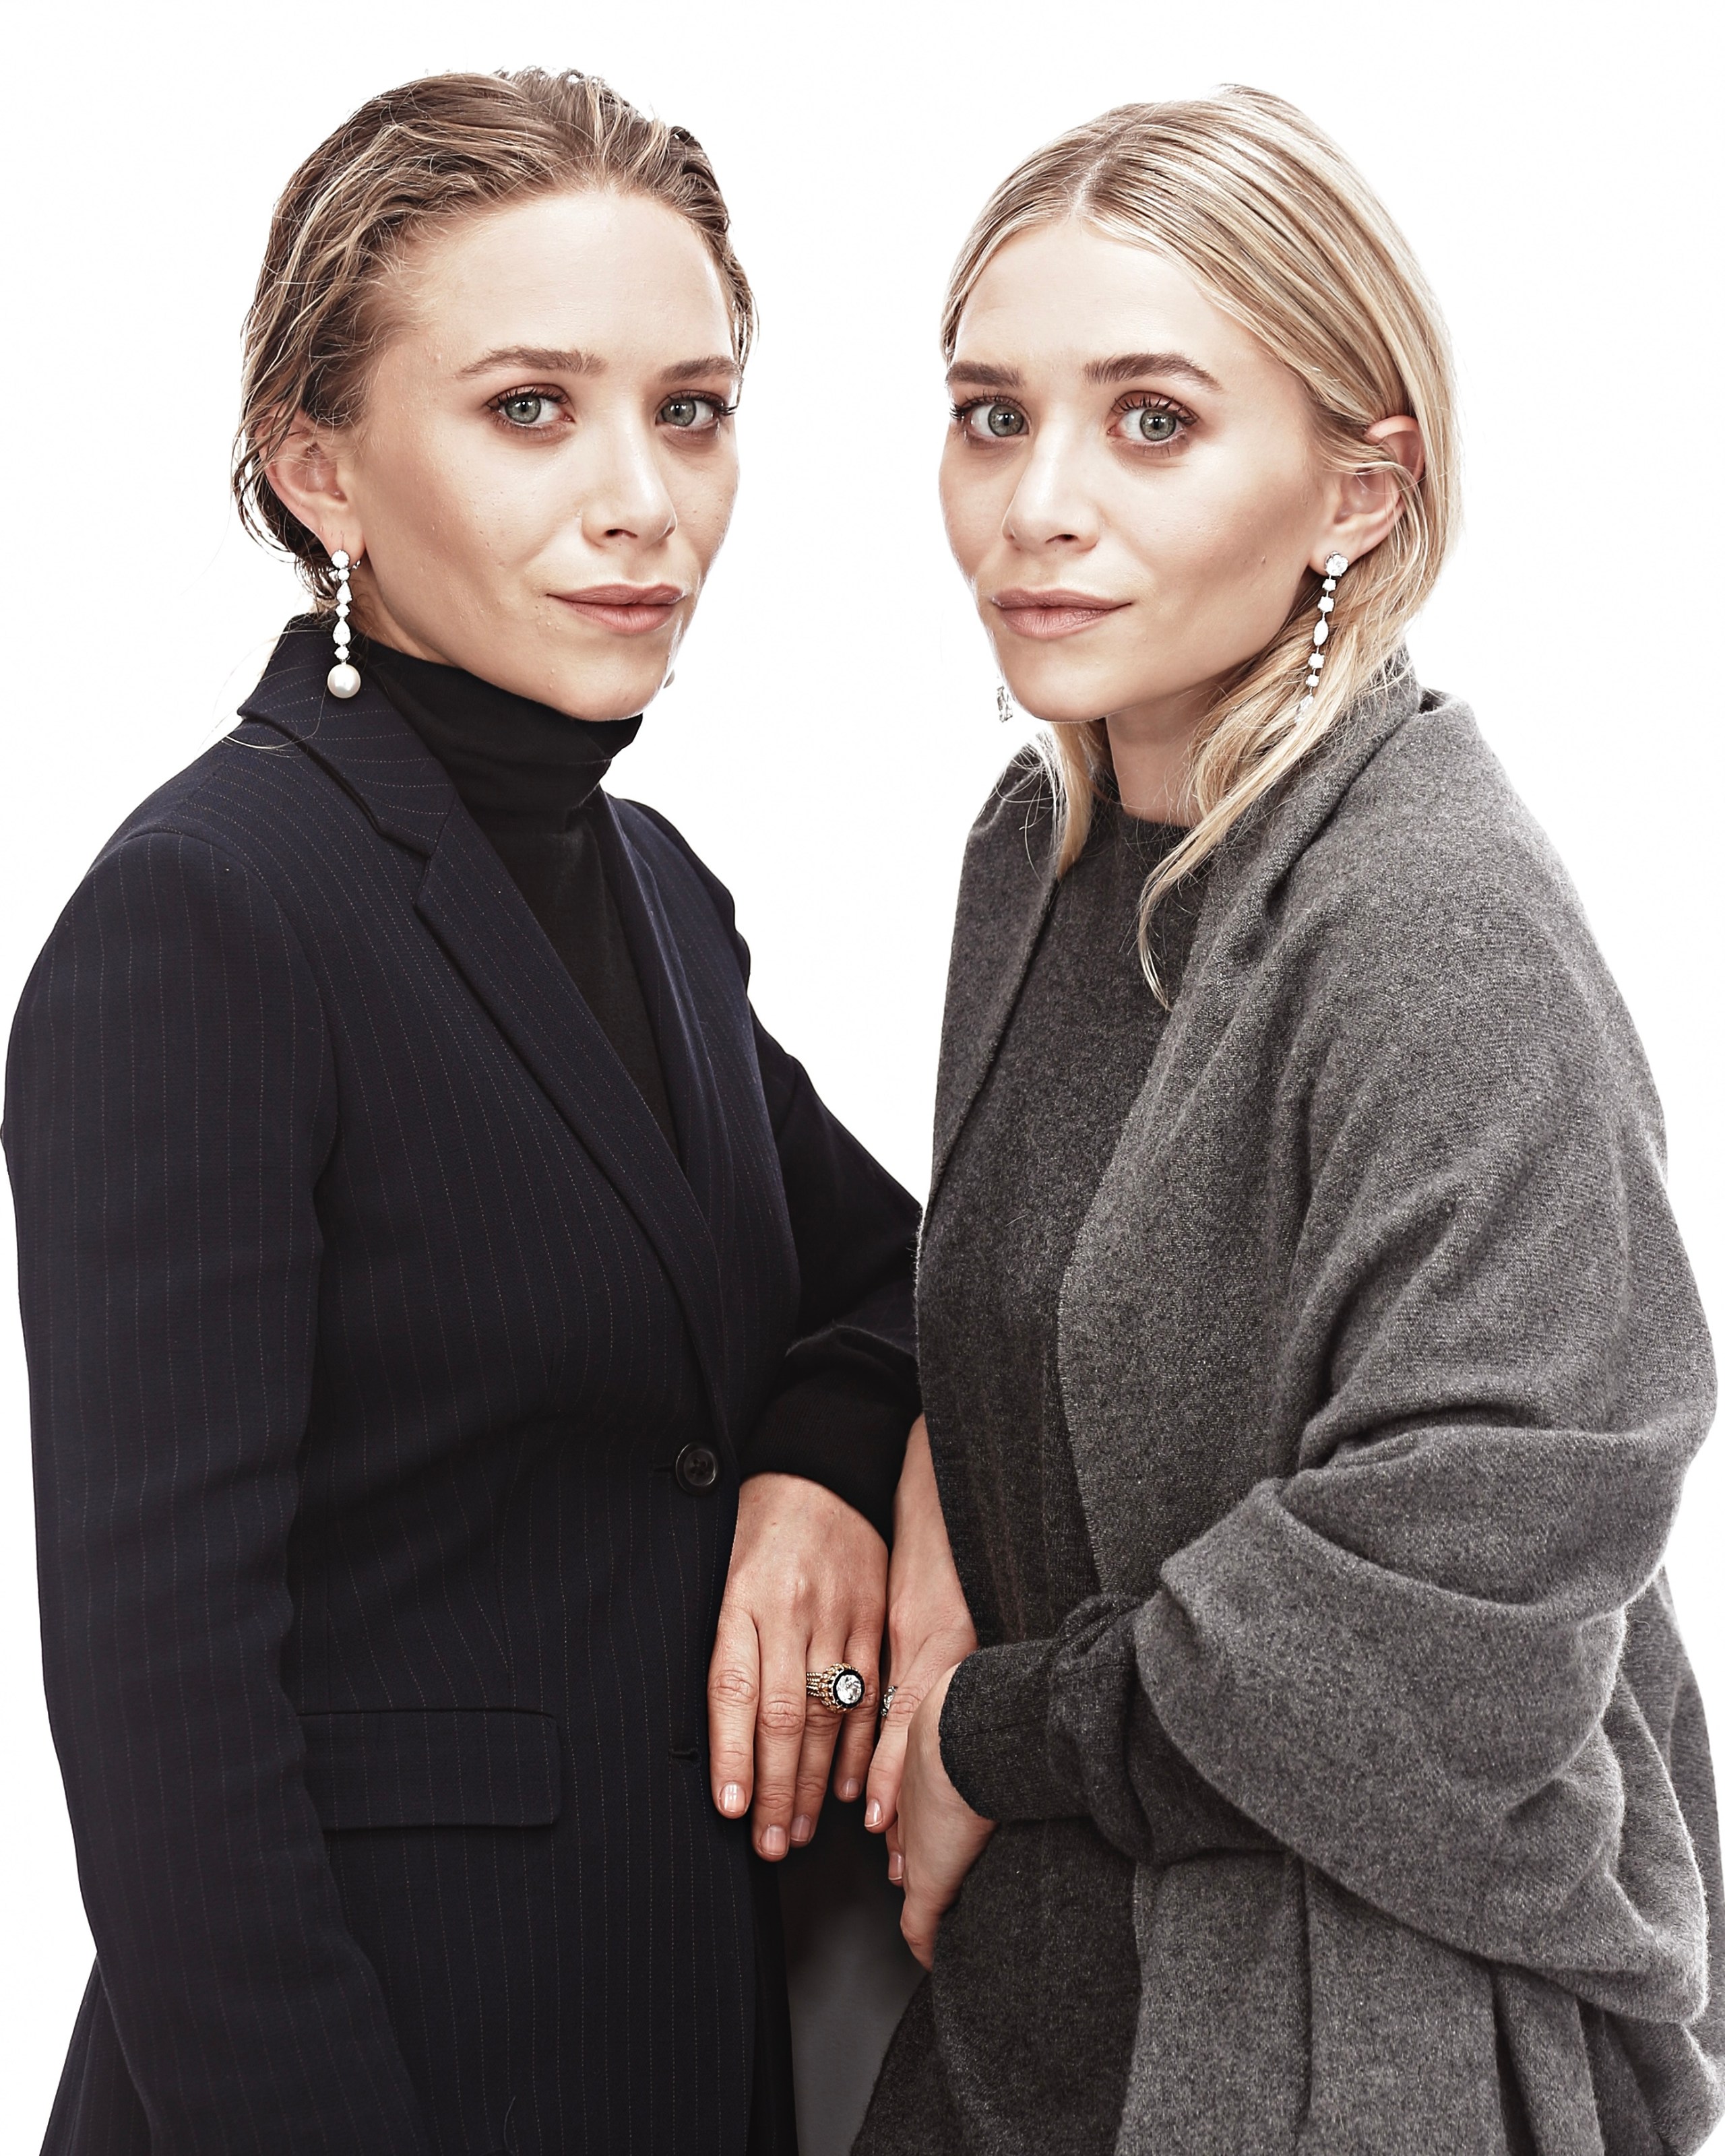 Mary-Kate Olsen Best Celebrity Natural Diamond Engagement Rings of All Time